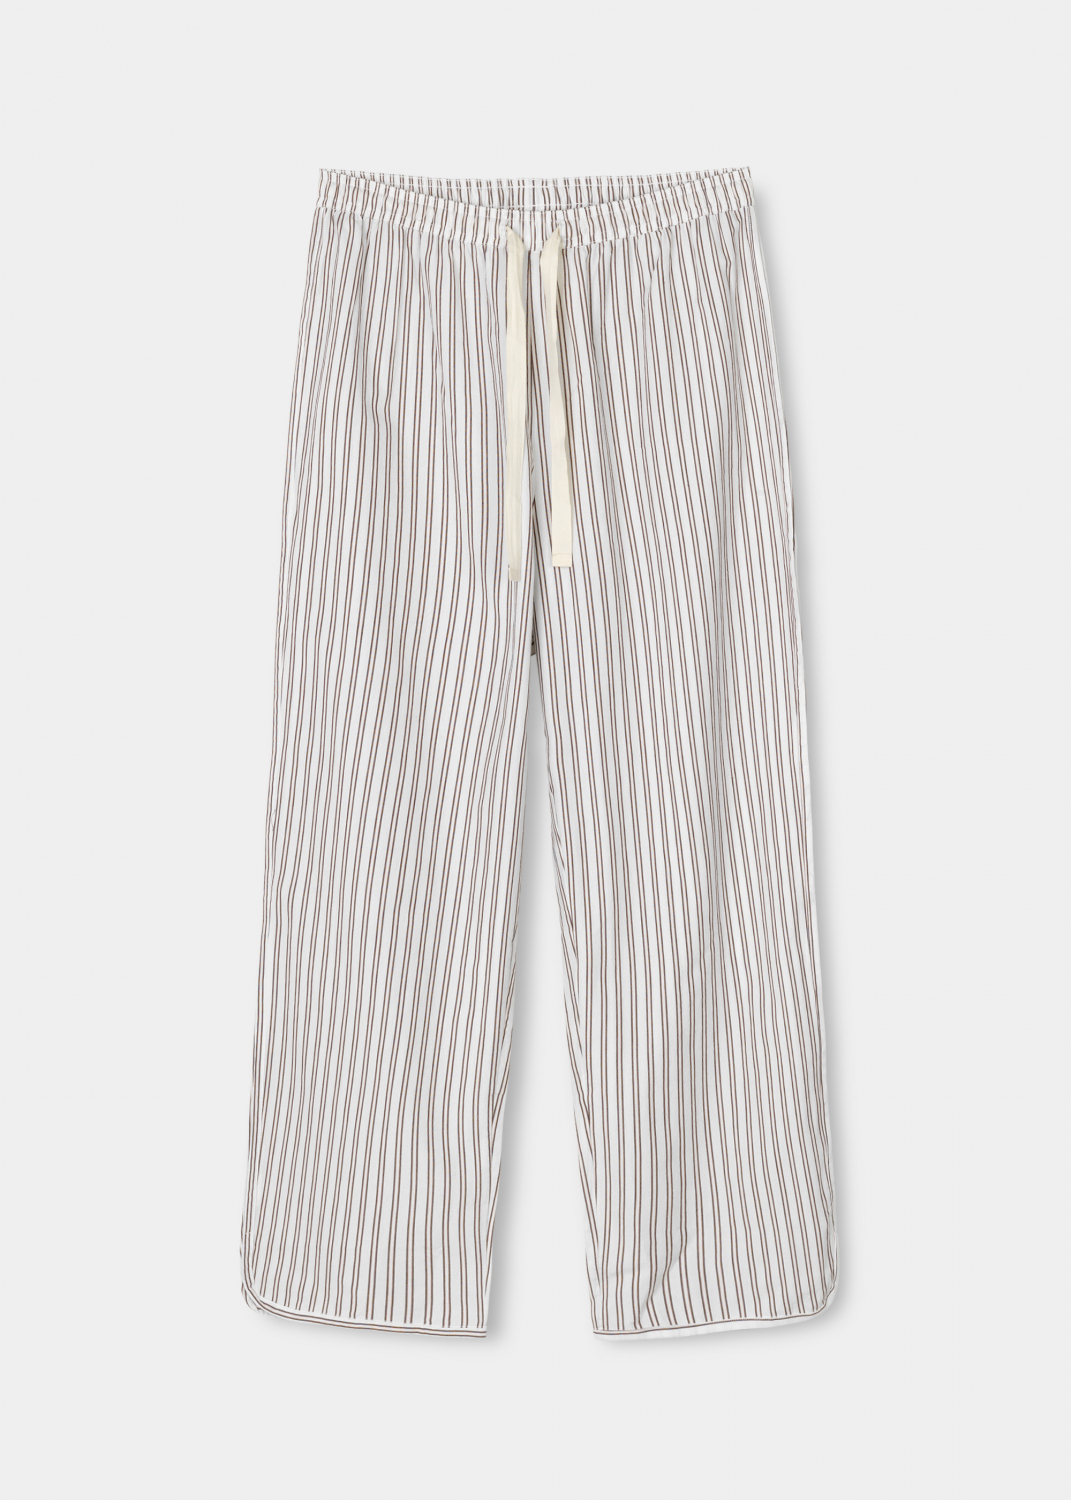 Sleepwear - Pyjamas Nonno